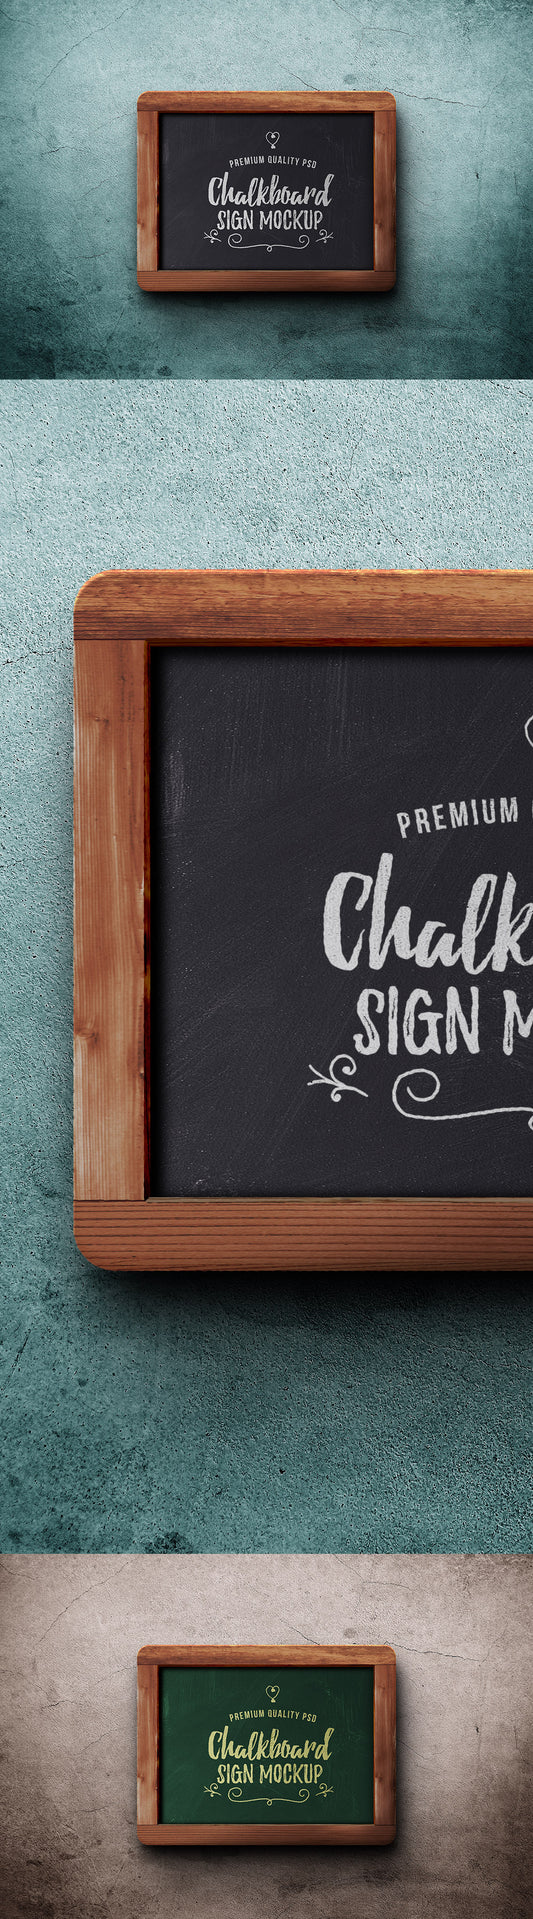 Free Old Fashioned Chalkboard Sign PSD Mockup